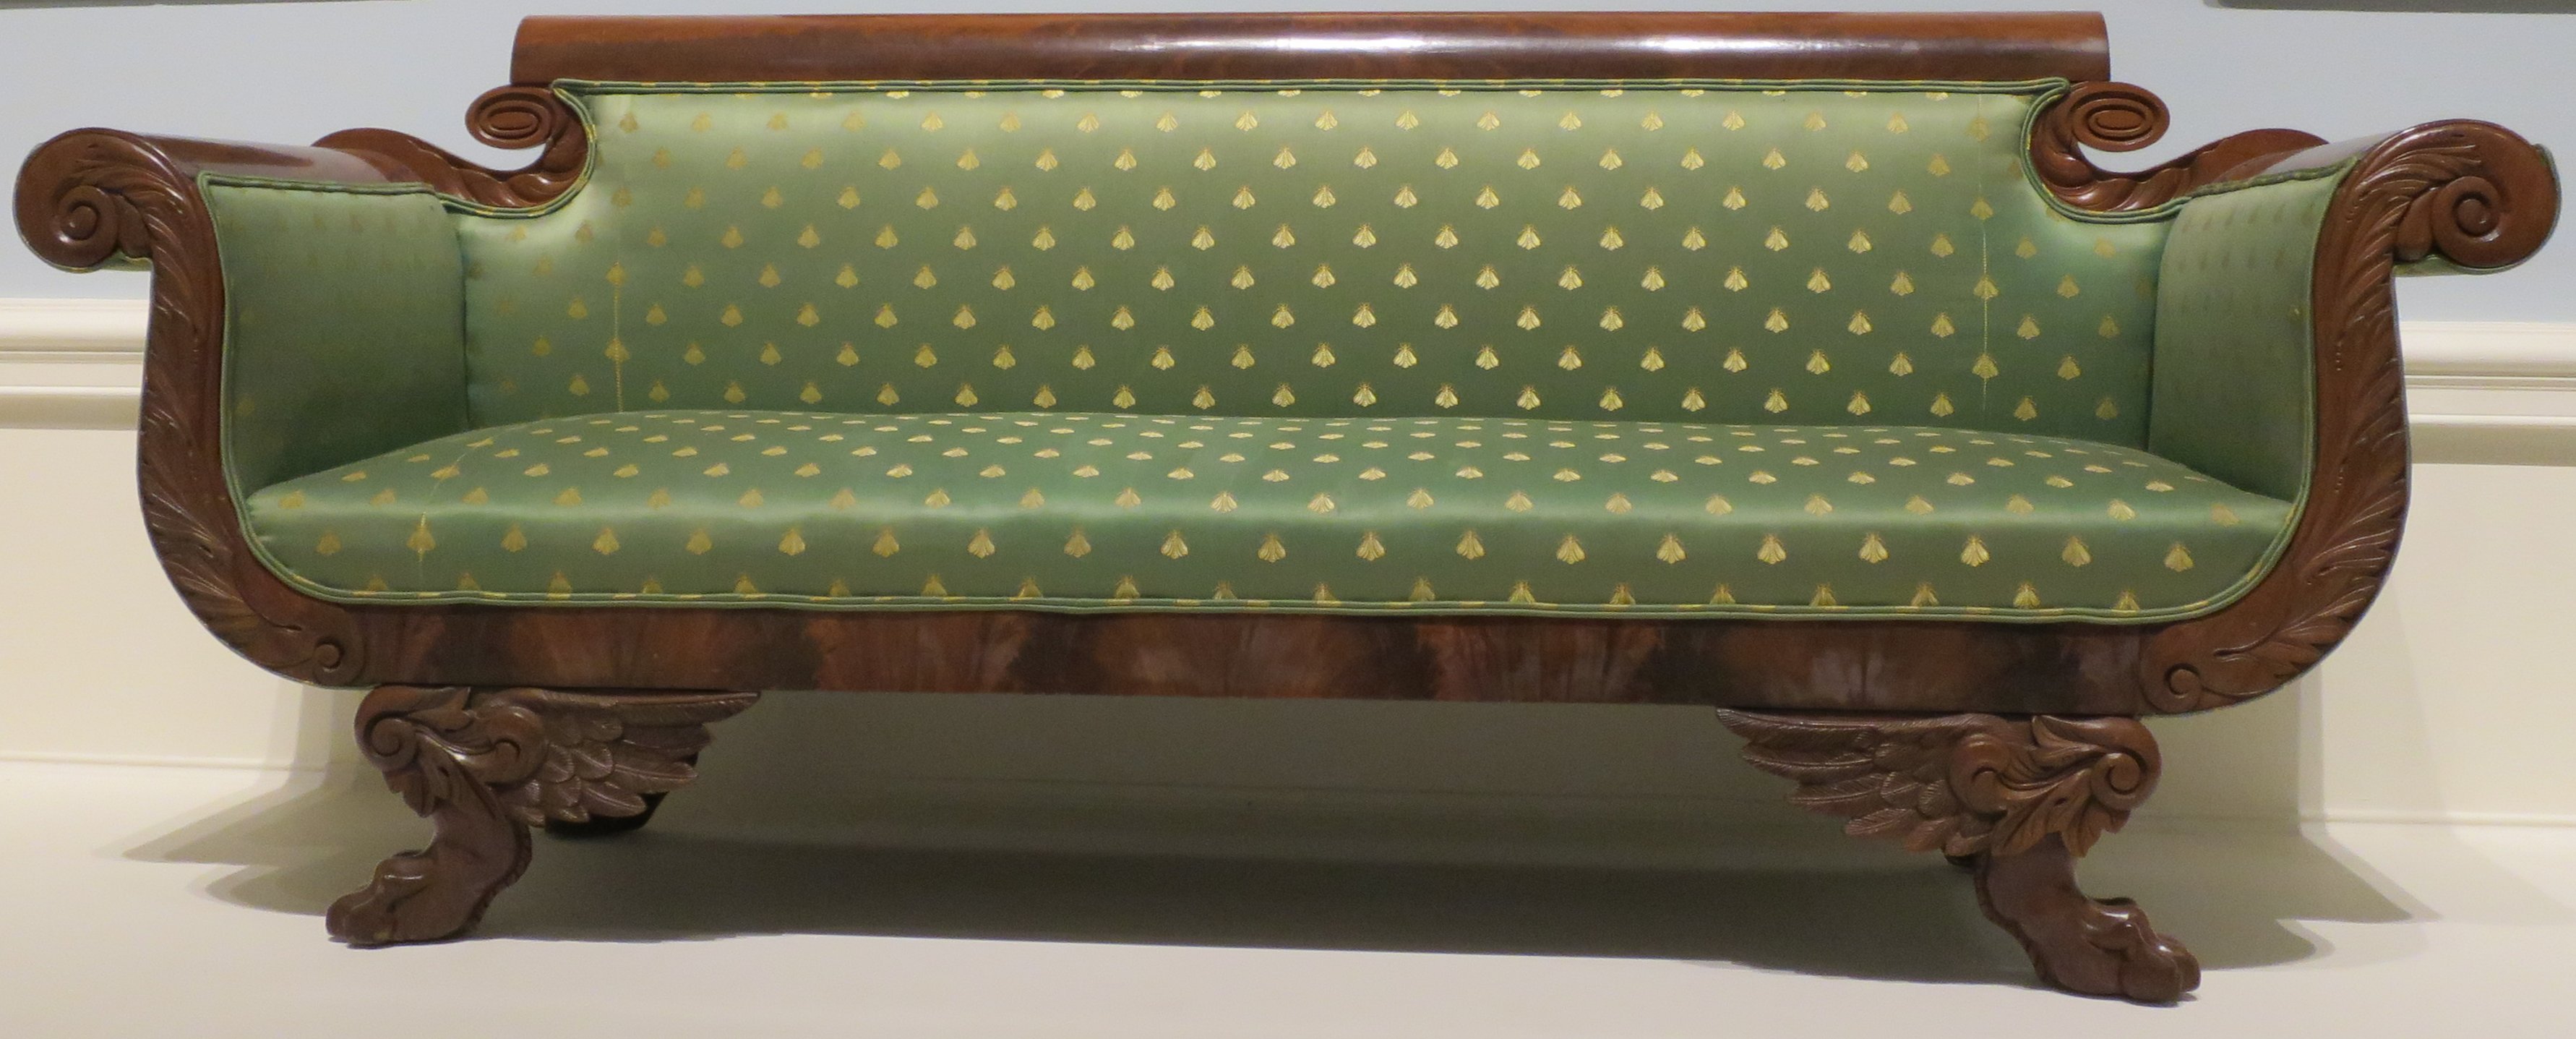 American_empire_style_sofa,_c._1820-30,_wood,_mahogany_veneer_and_brocade_upholstery,_Dayton_Art_Institute.jpg